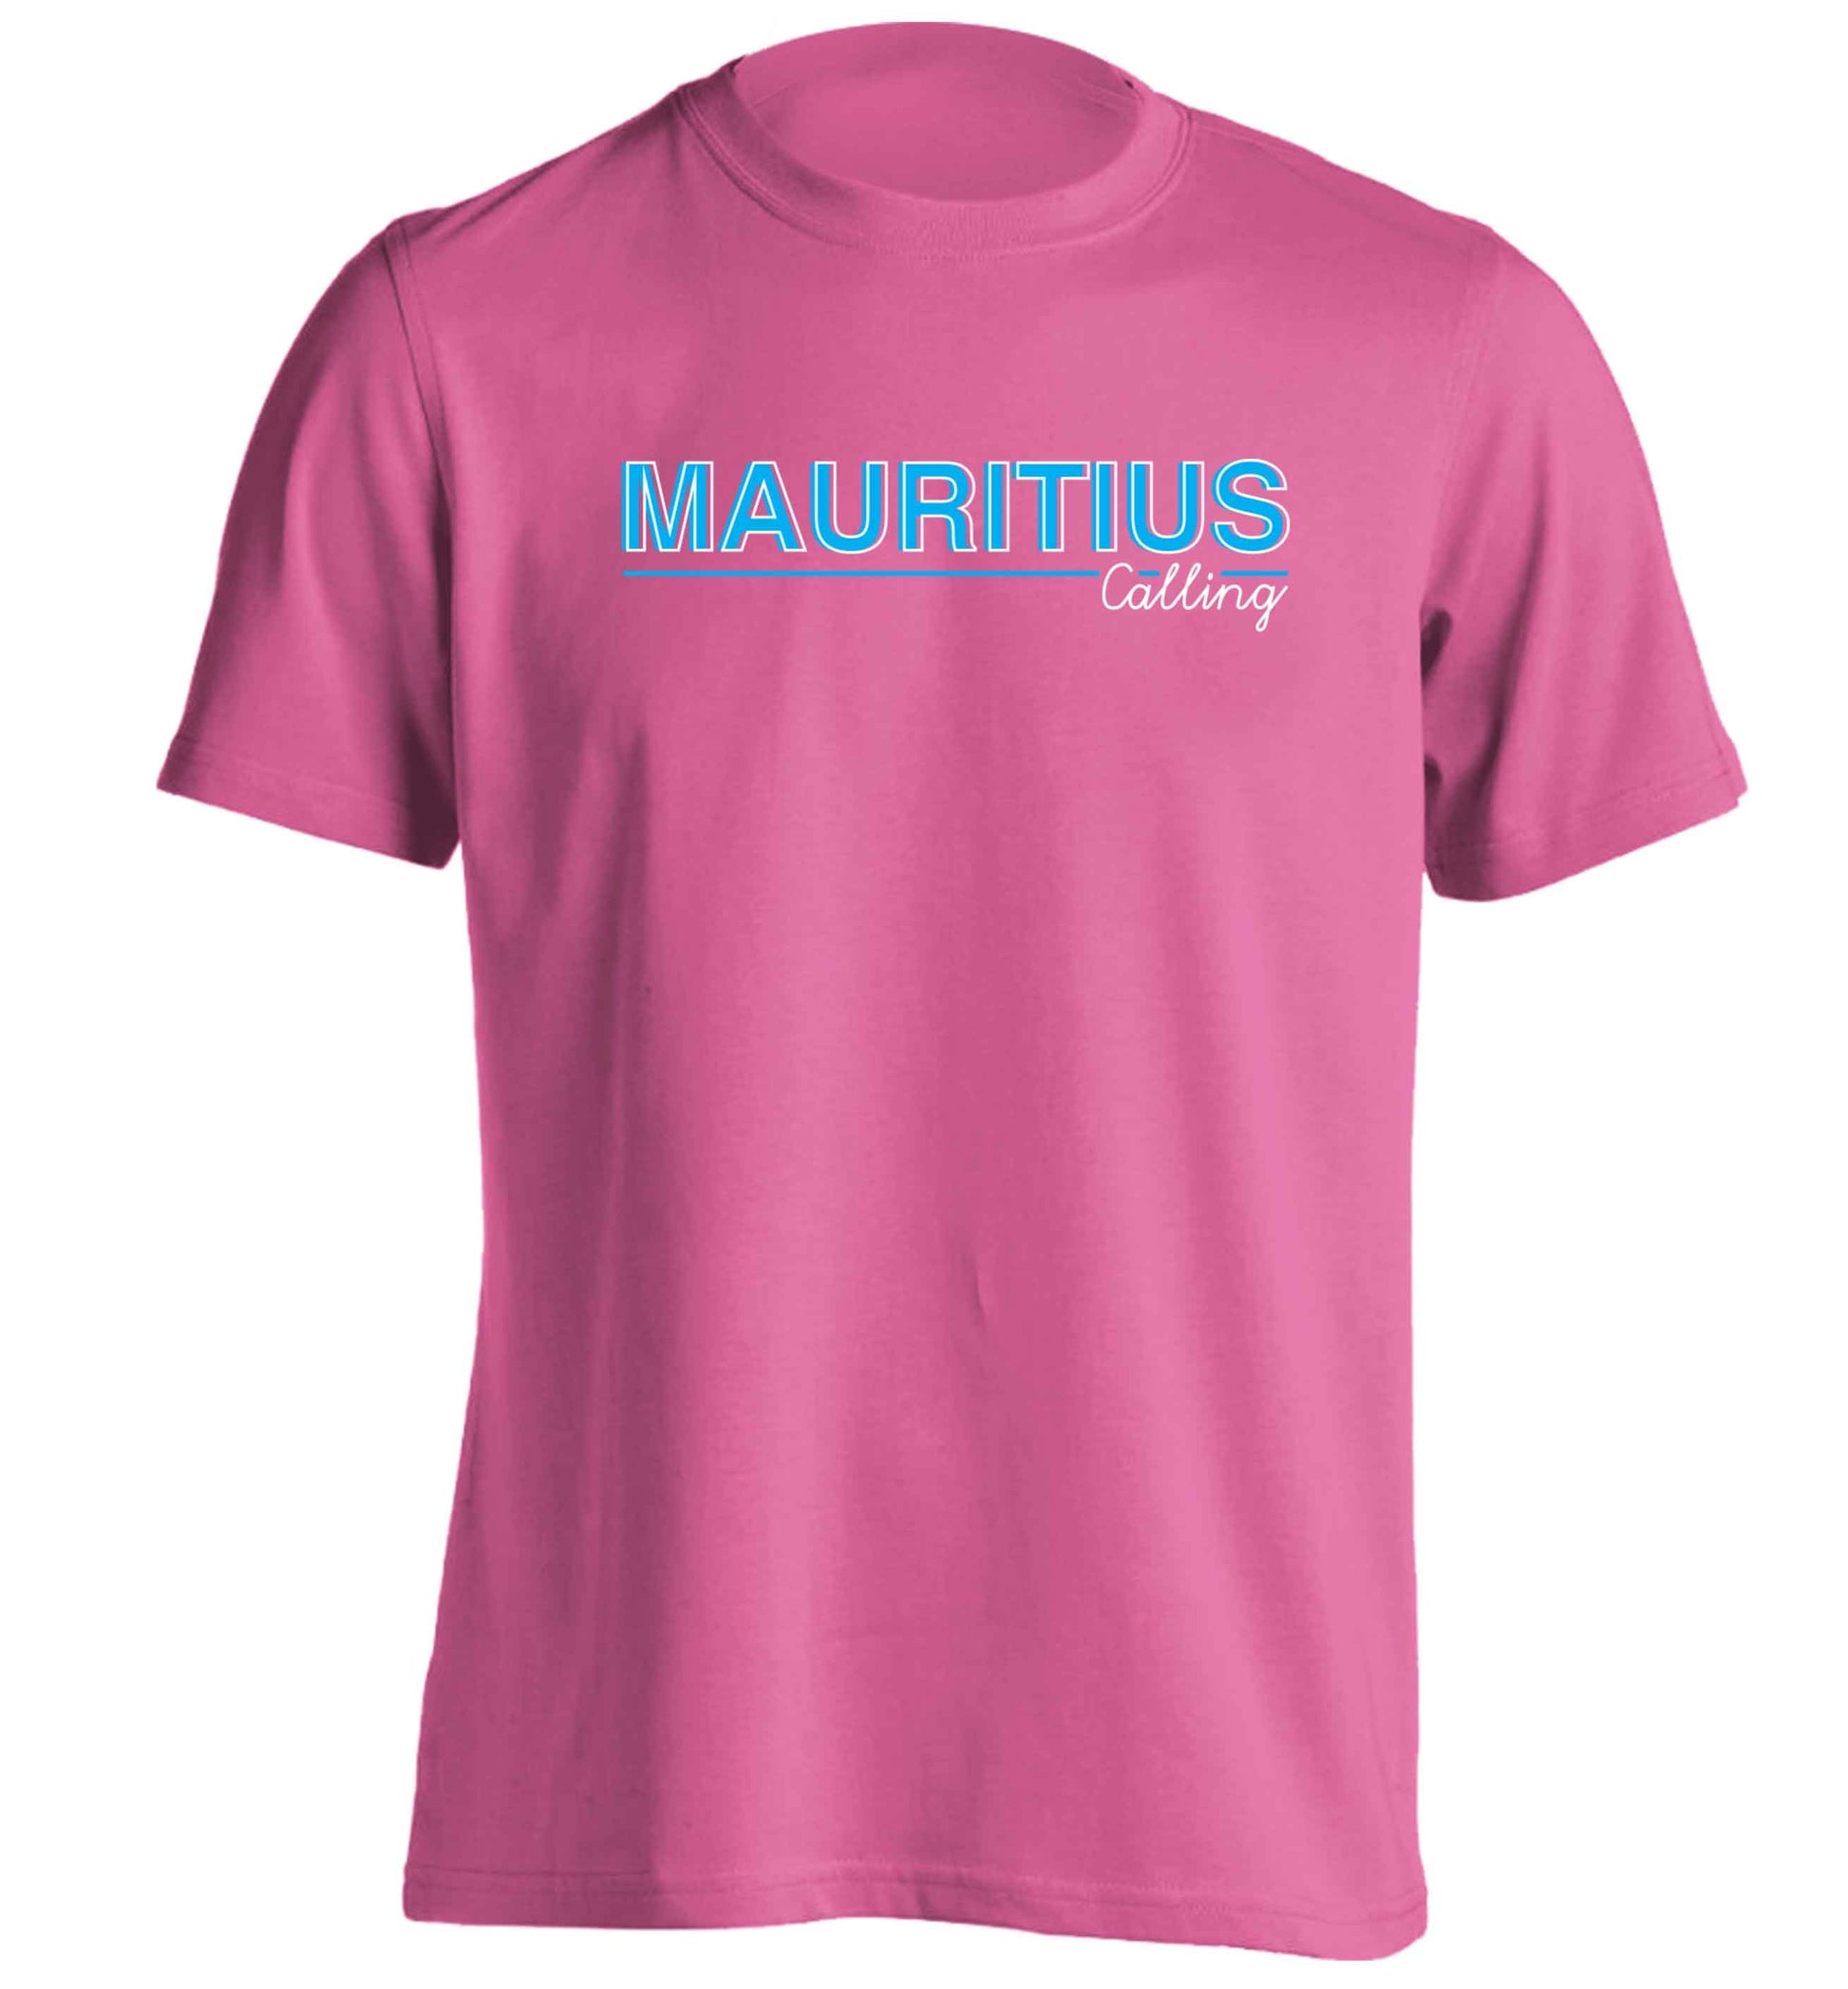 Mauritius calling adults unisex pink Tshirt 2XL